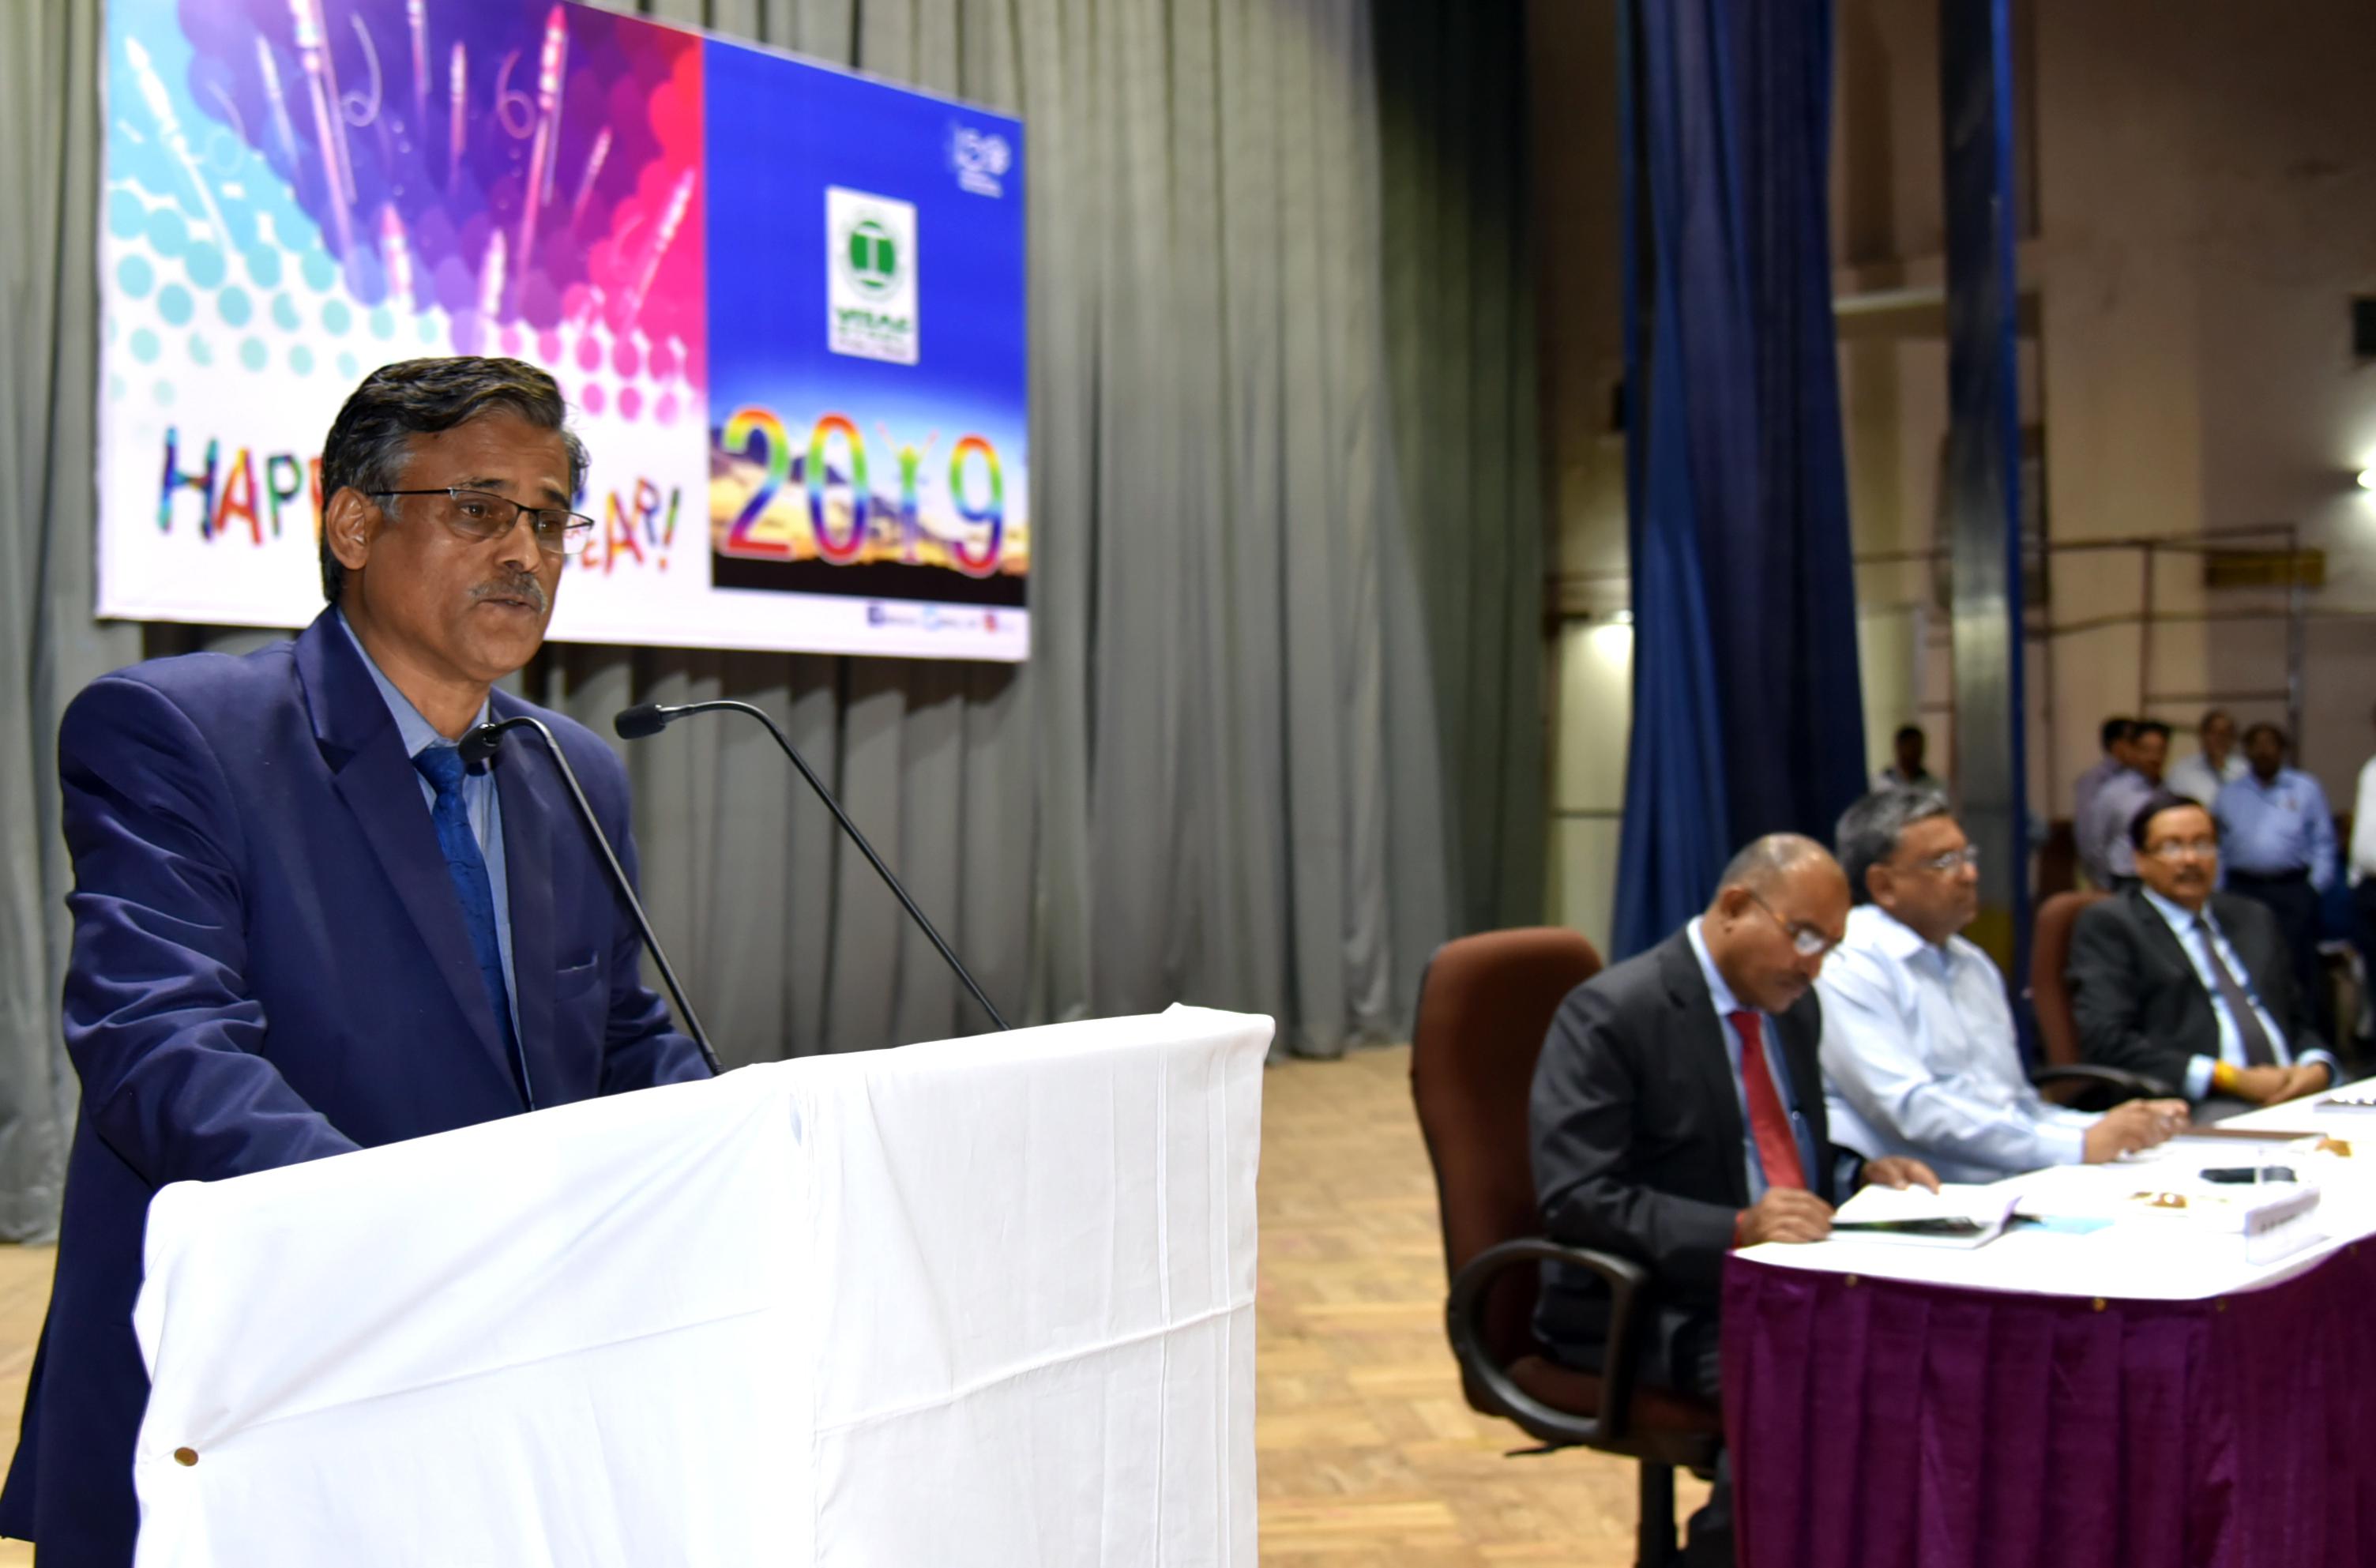 RINL achieves many heights in 2018: Sri PK Rath, CMD